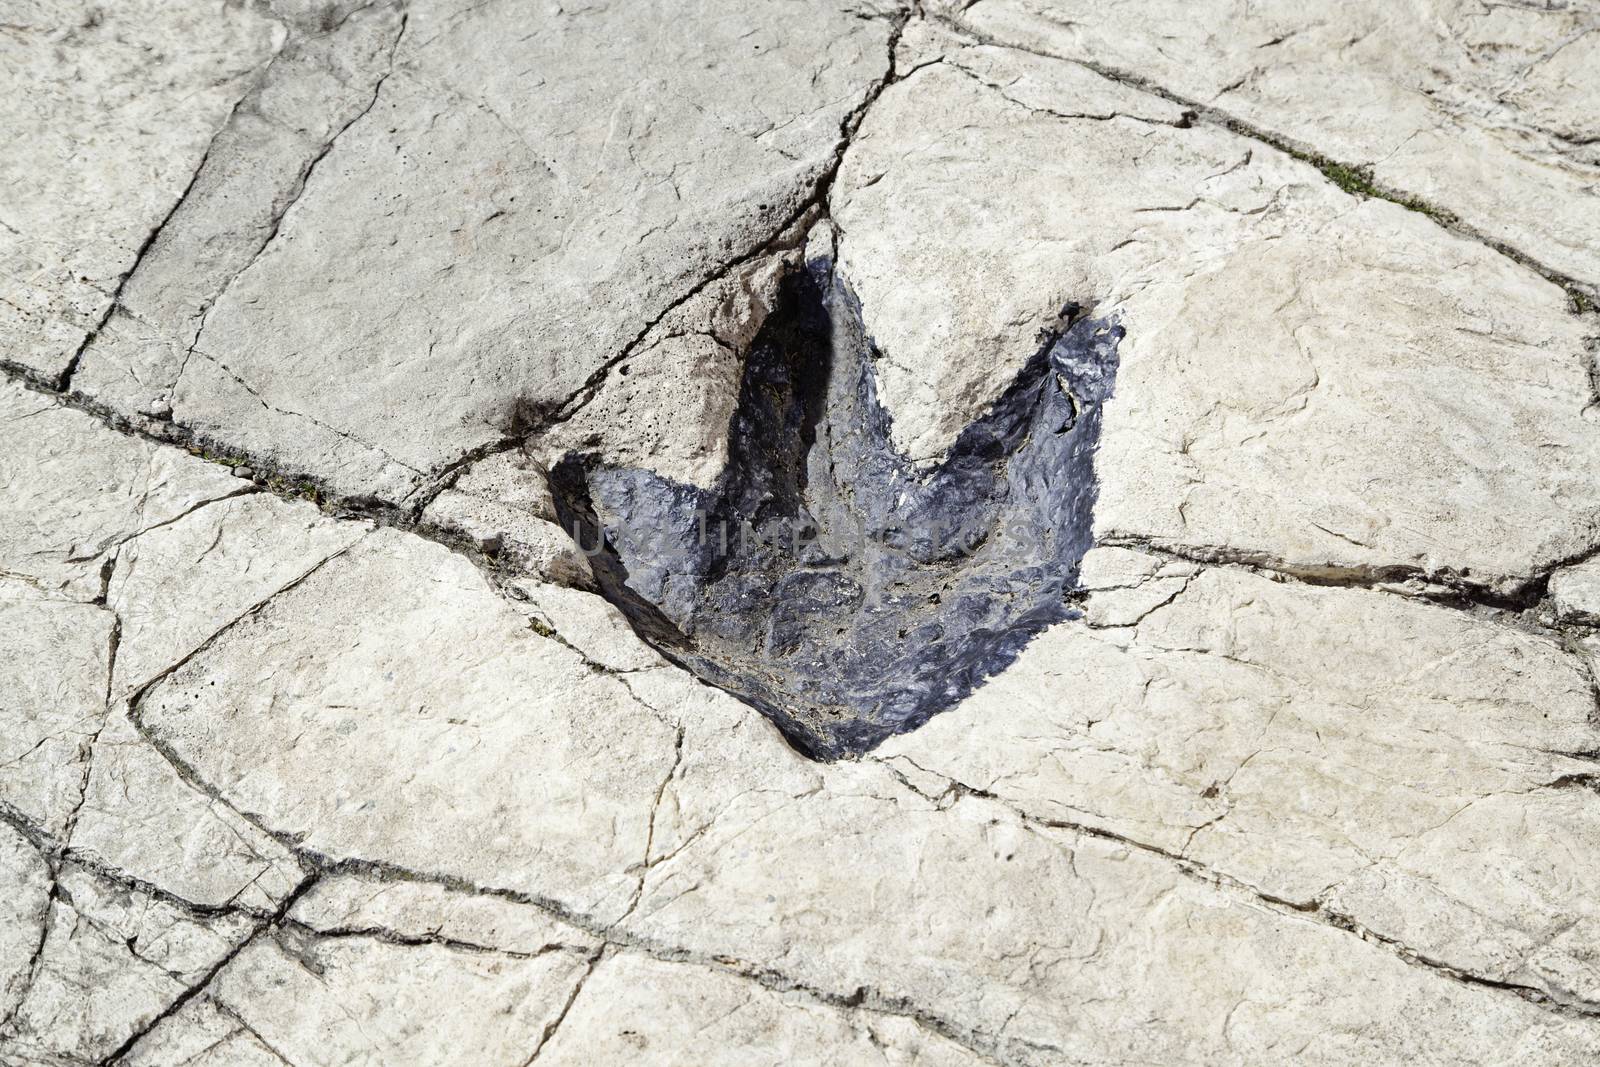 Fossilized dinosaur footprint by esebene